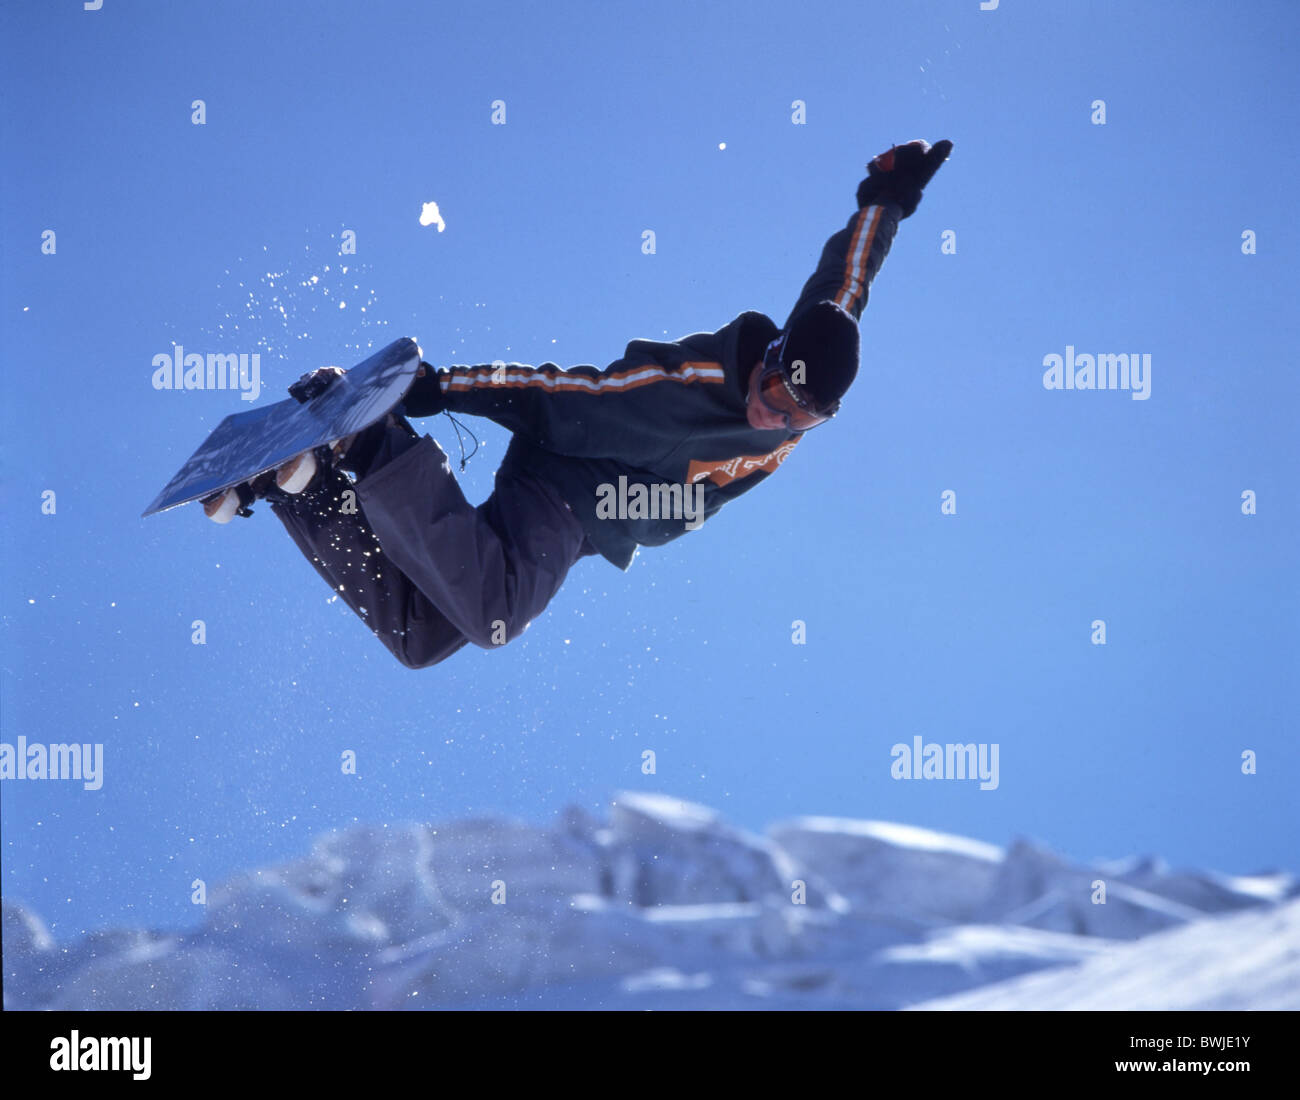 snowboard Snowboarder action jump Snowboarding winter sports winter mountains Switzerland Europe sport Stock Photo